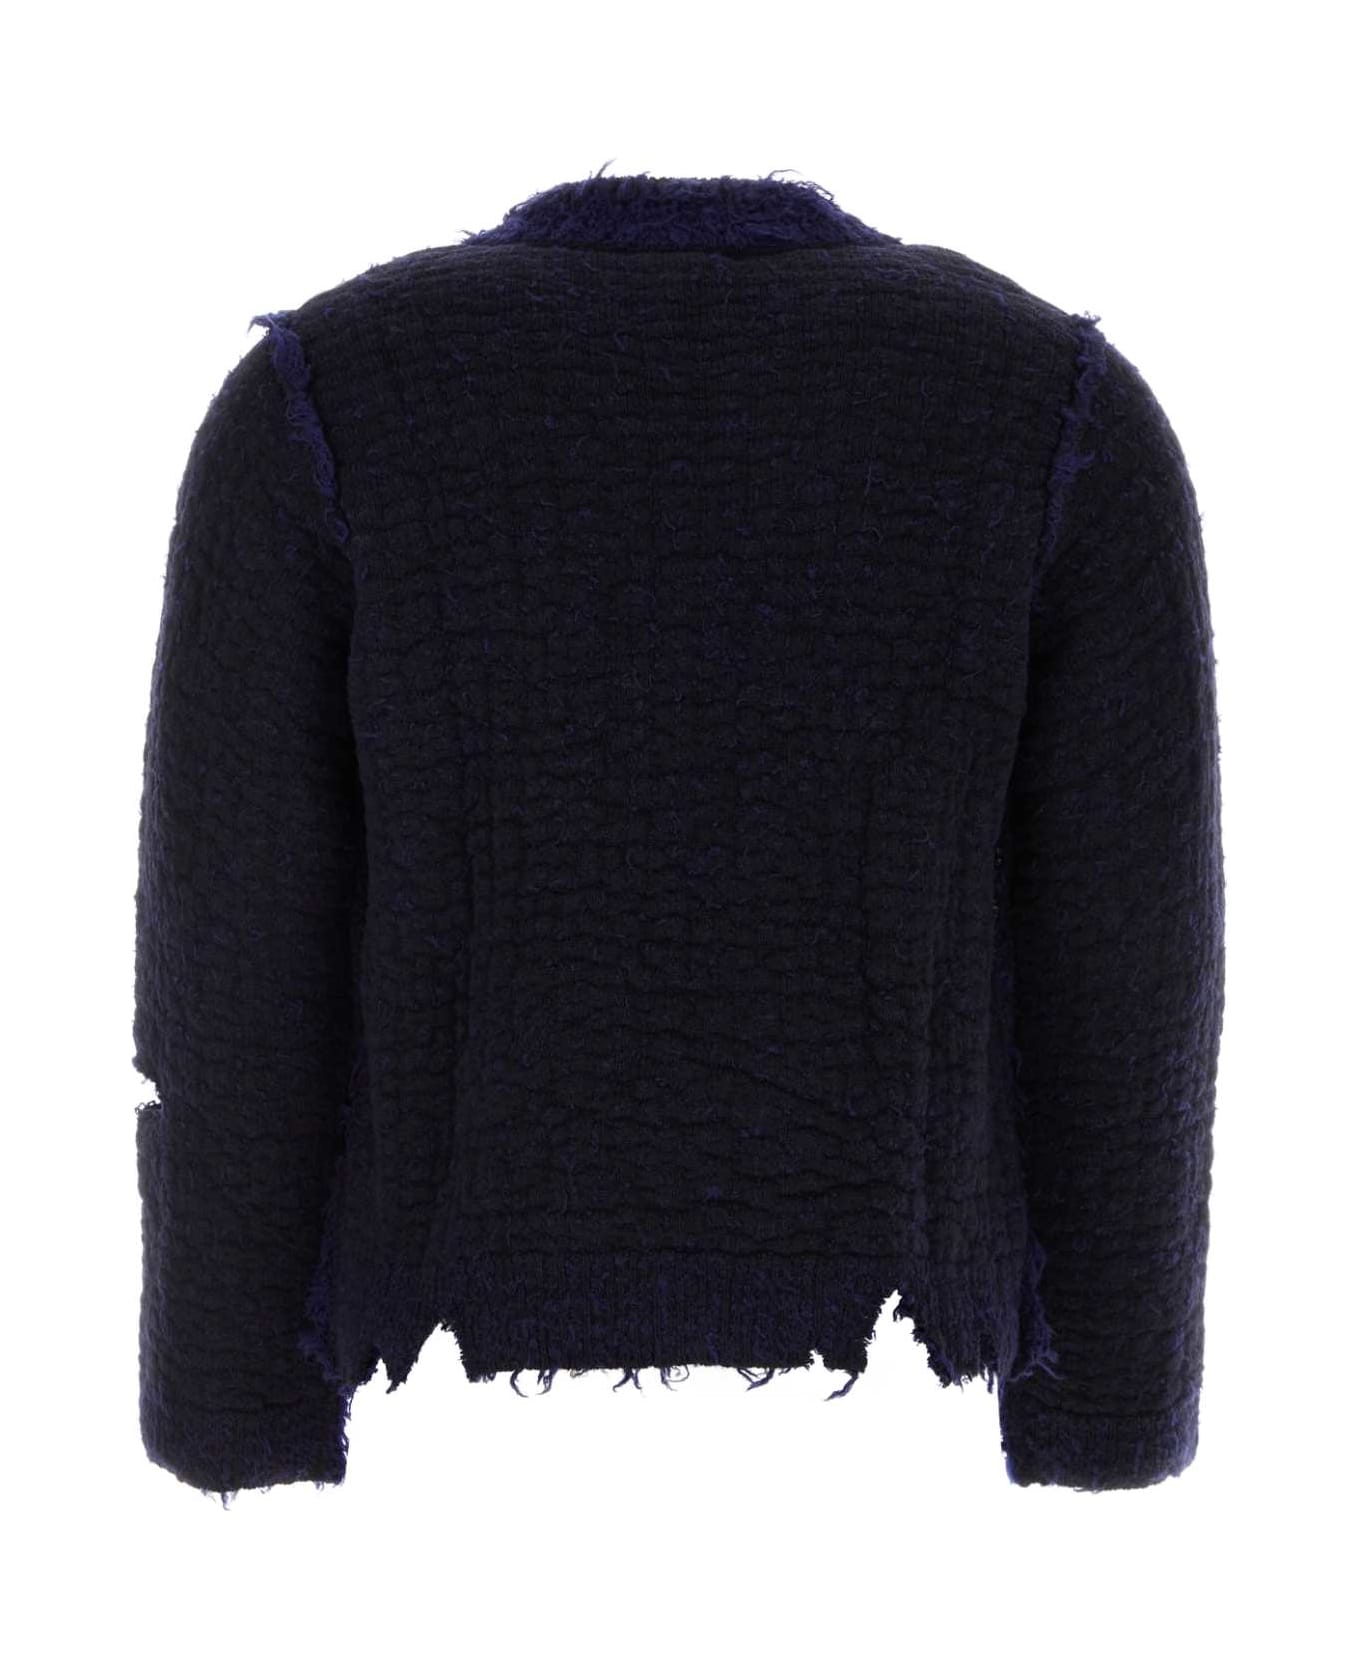 Namacheko Two-tone Wool Blend Sweater - NAVY